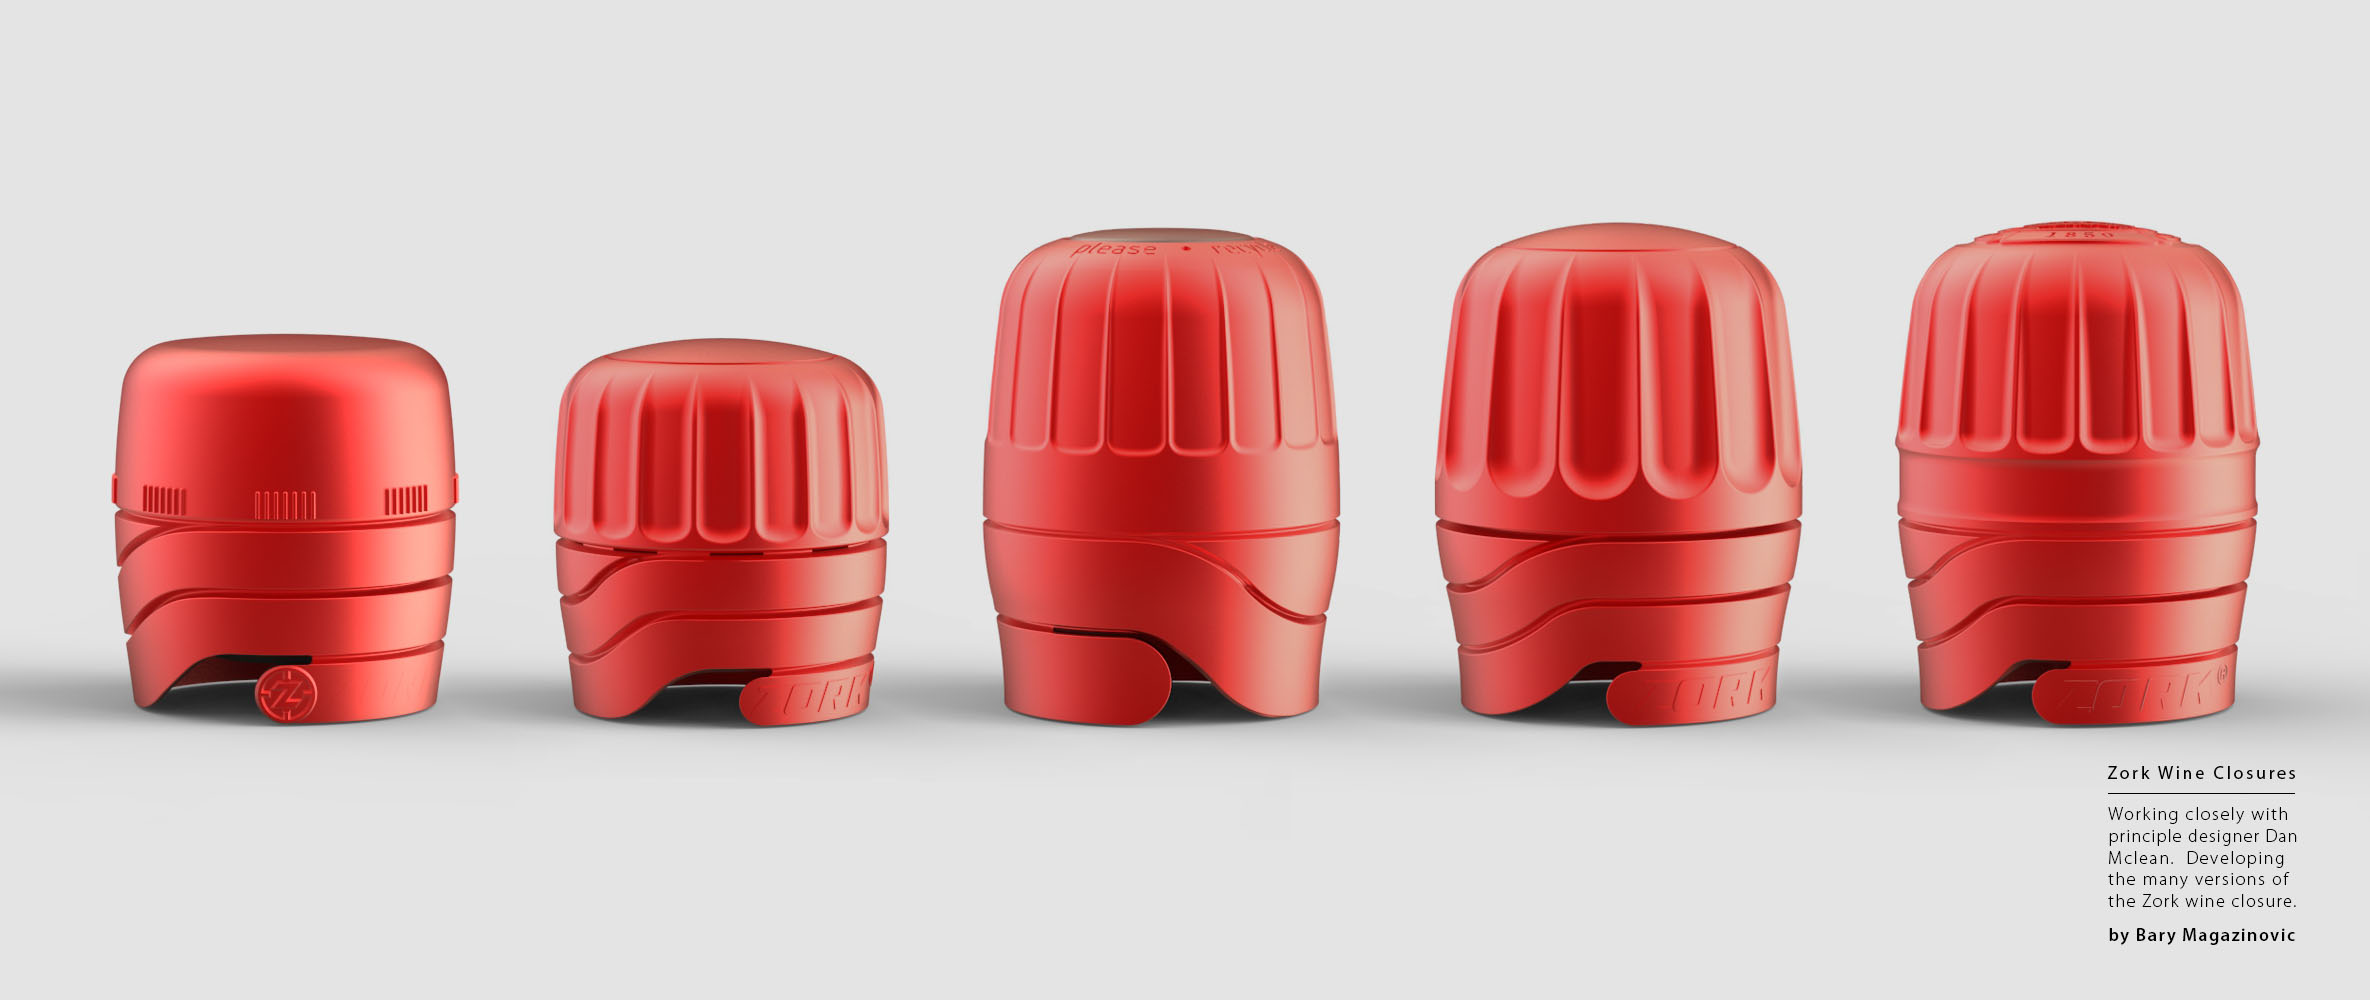 Australian Product Design Industrial Design Zork Wine closure range red CAD rendering by Barry Magazinovic